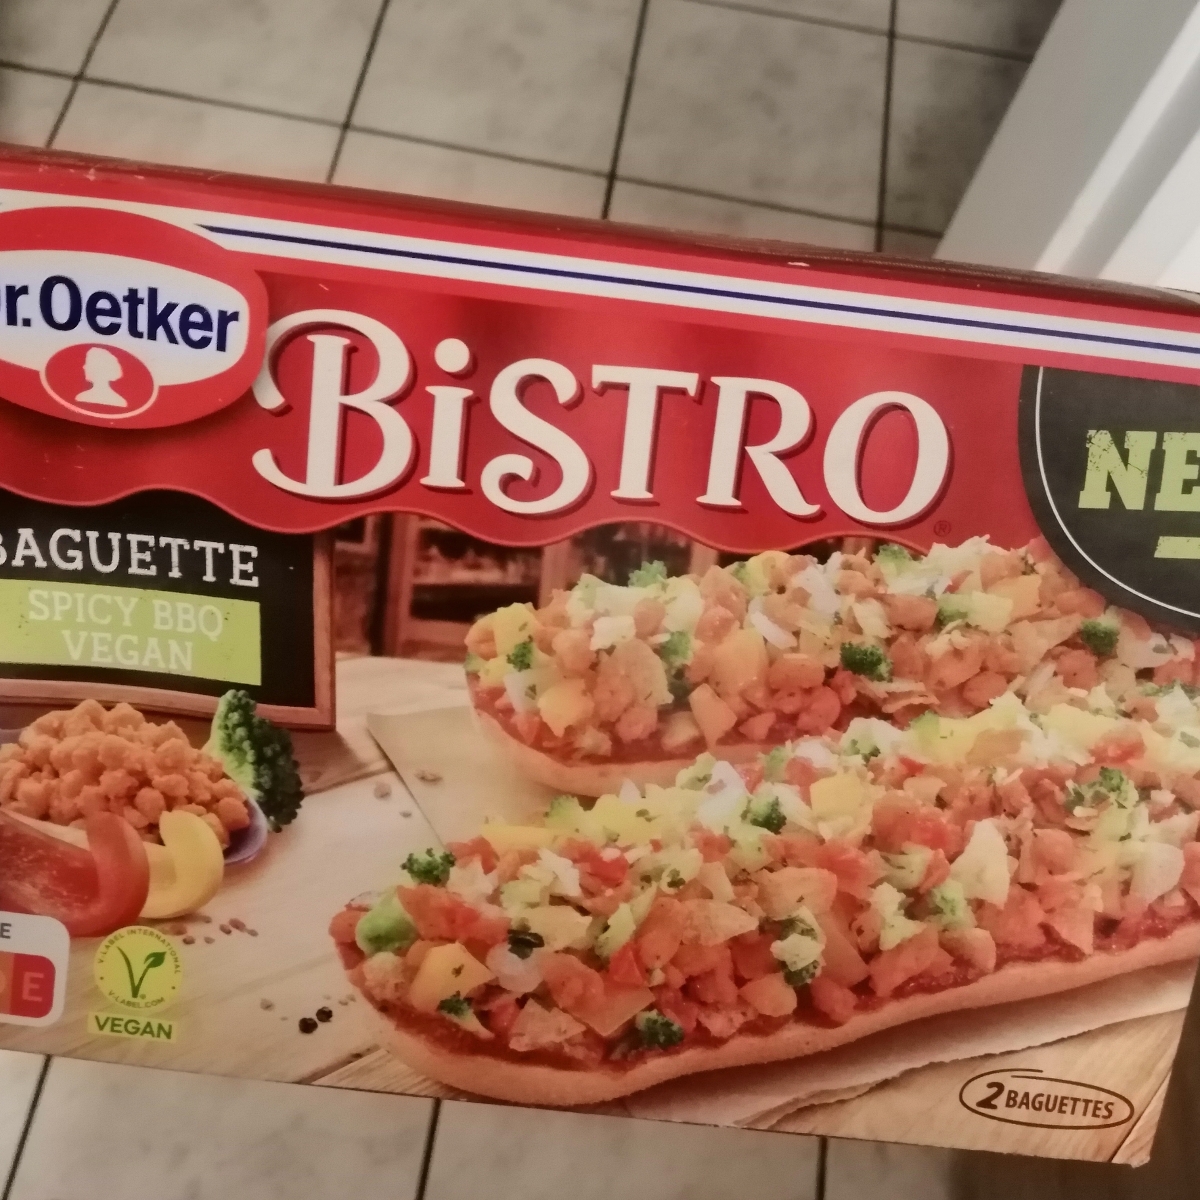 Dr. Oetker Bistro Vegan abillion Spicy | Review BBQ Baguette